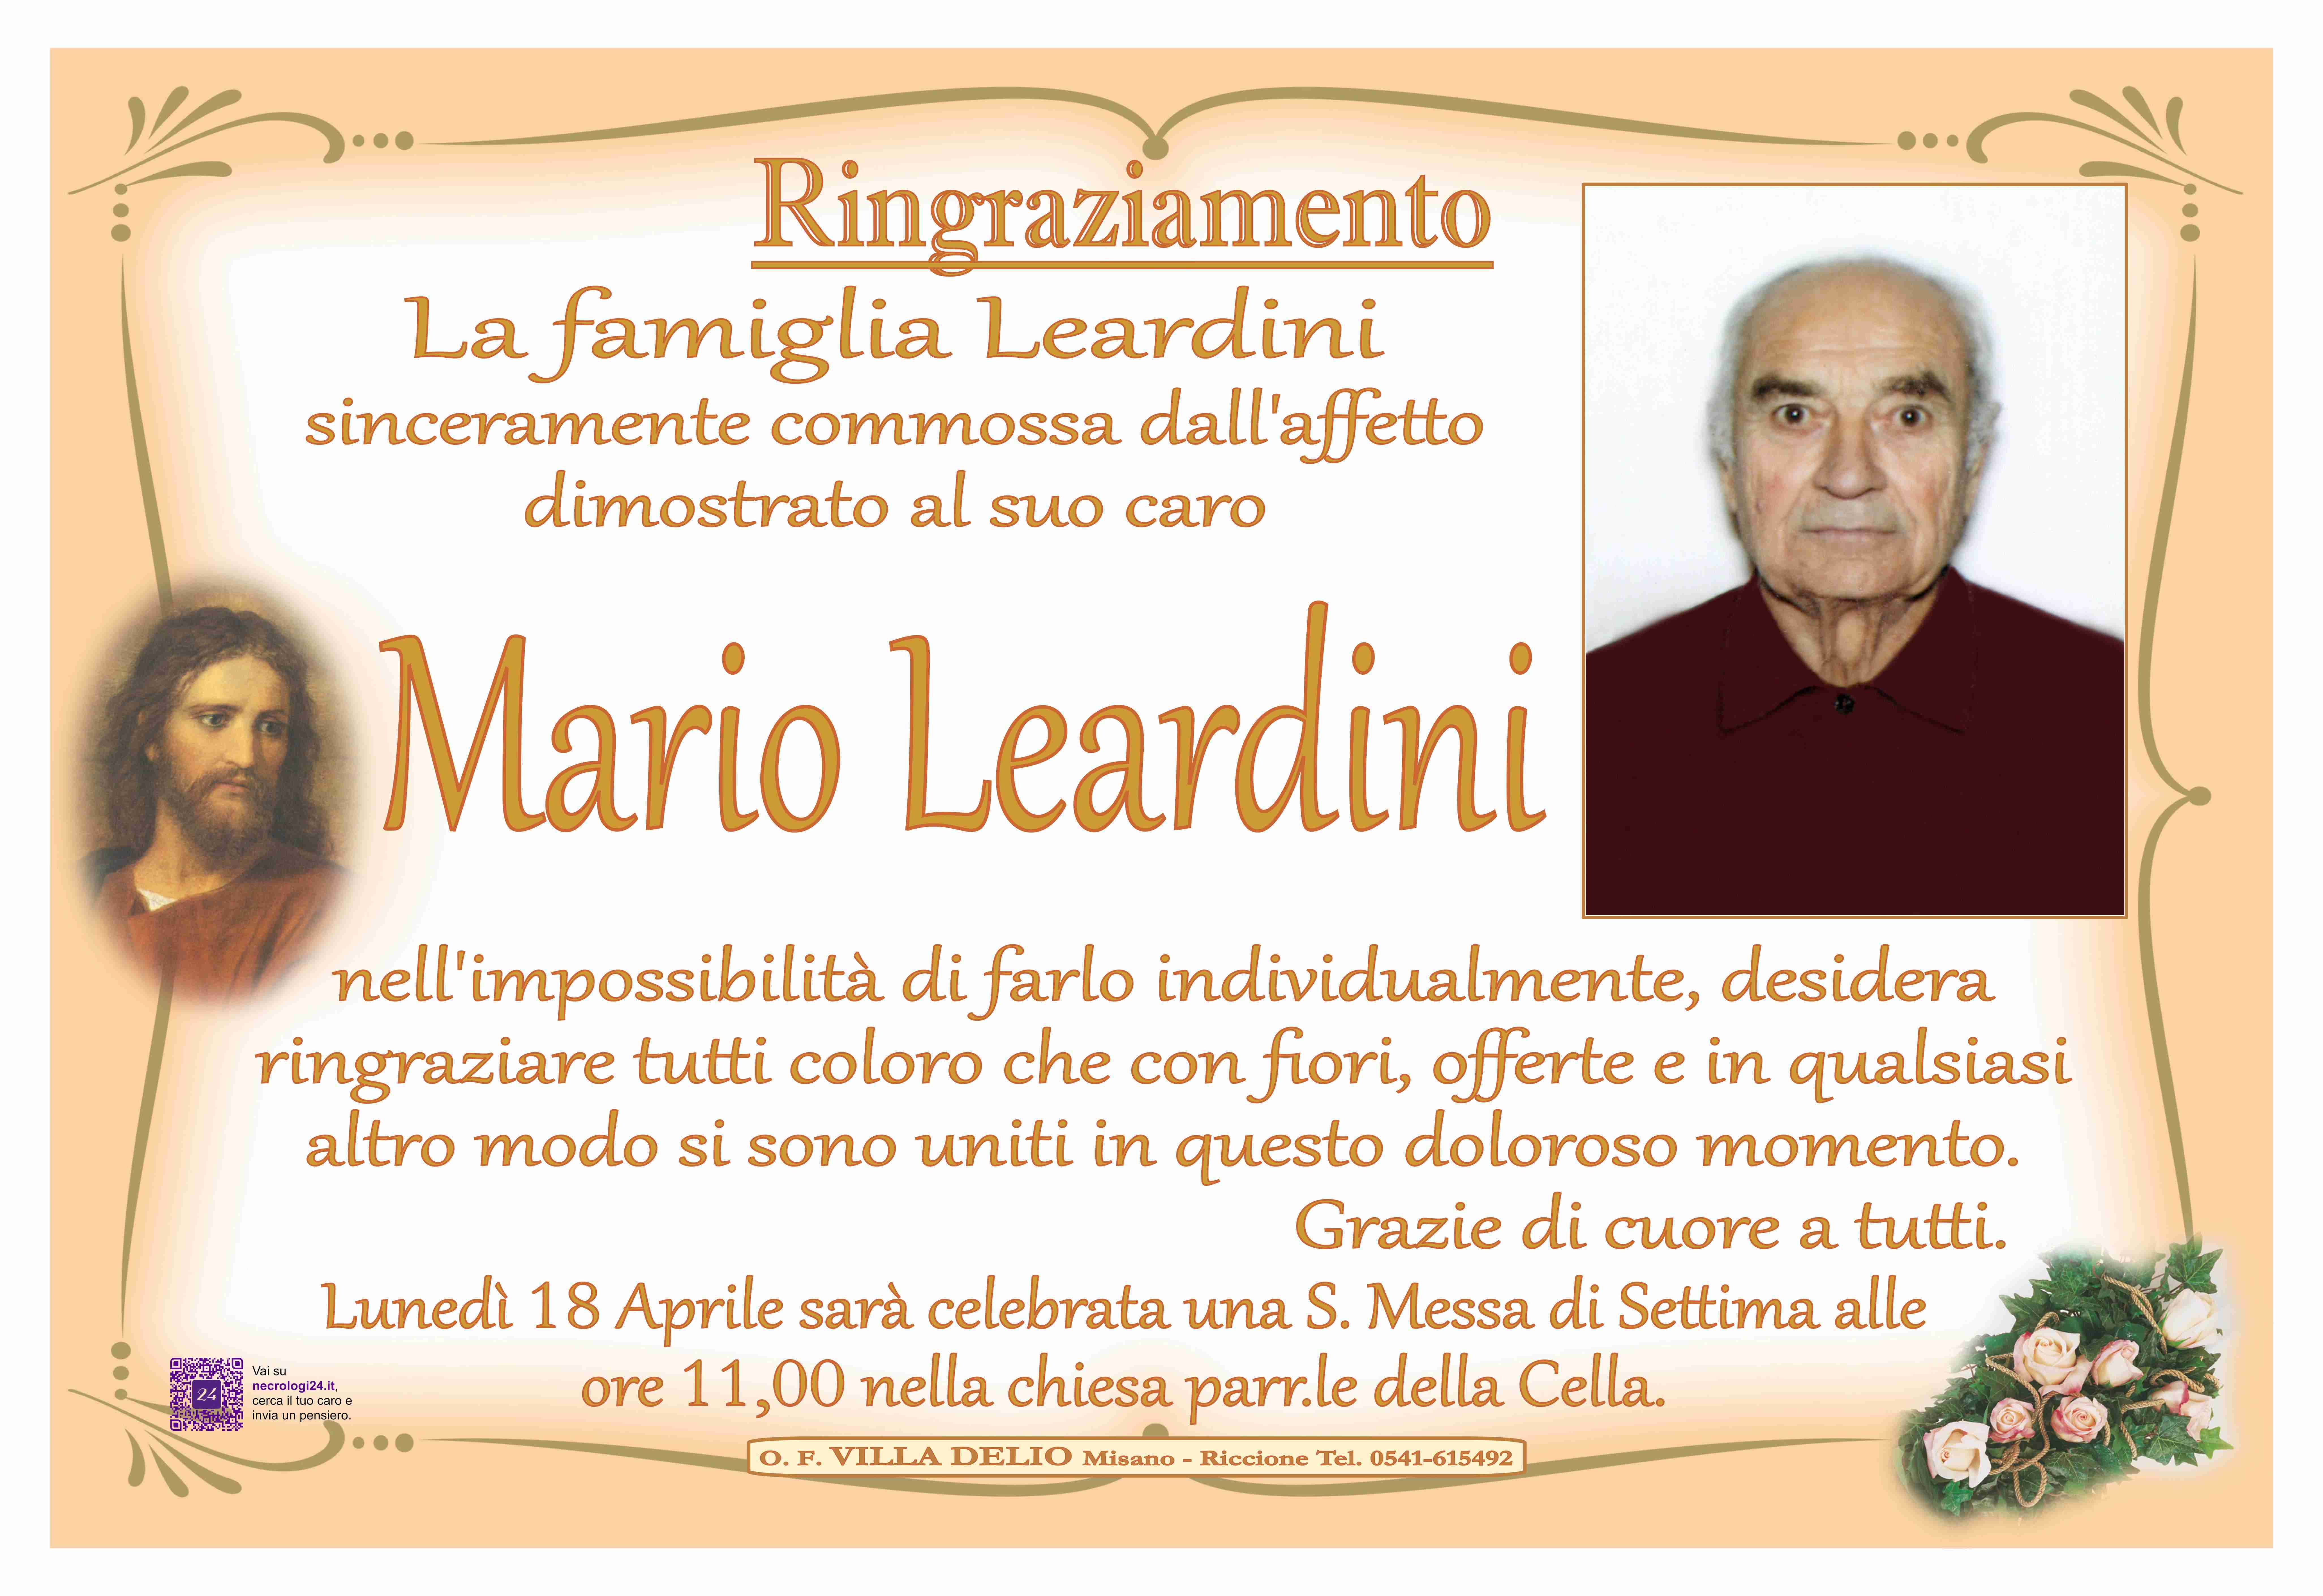 Mario Leardini